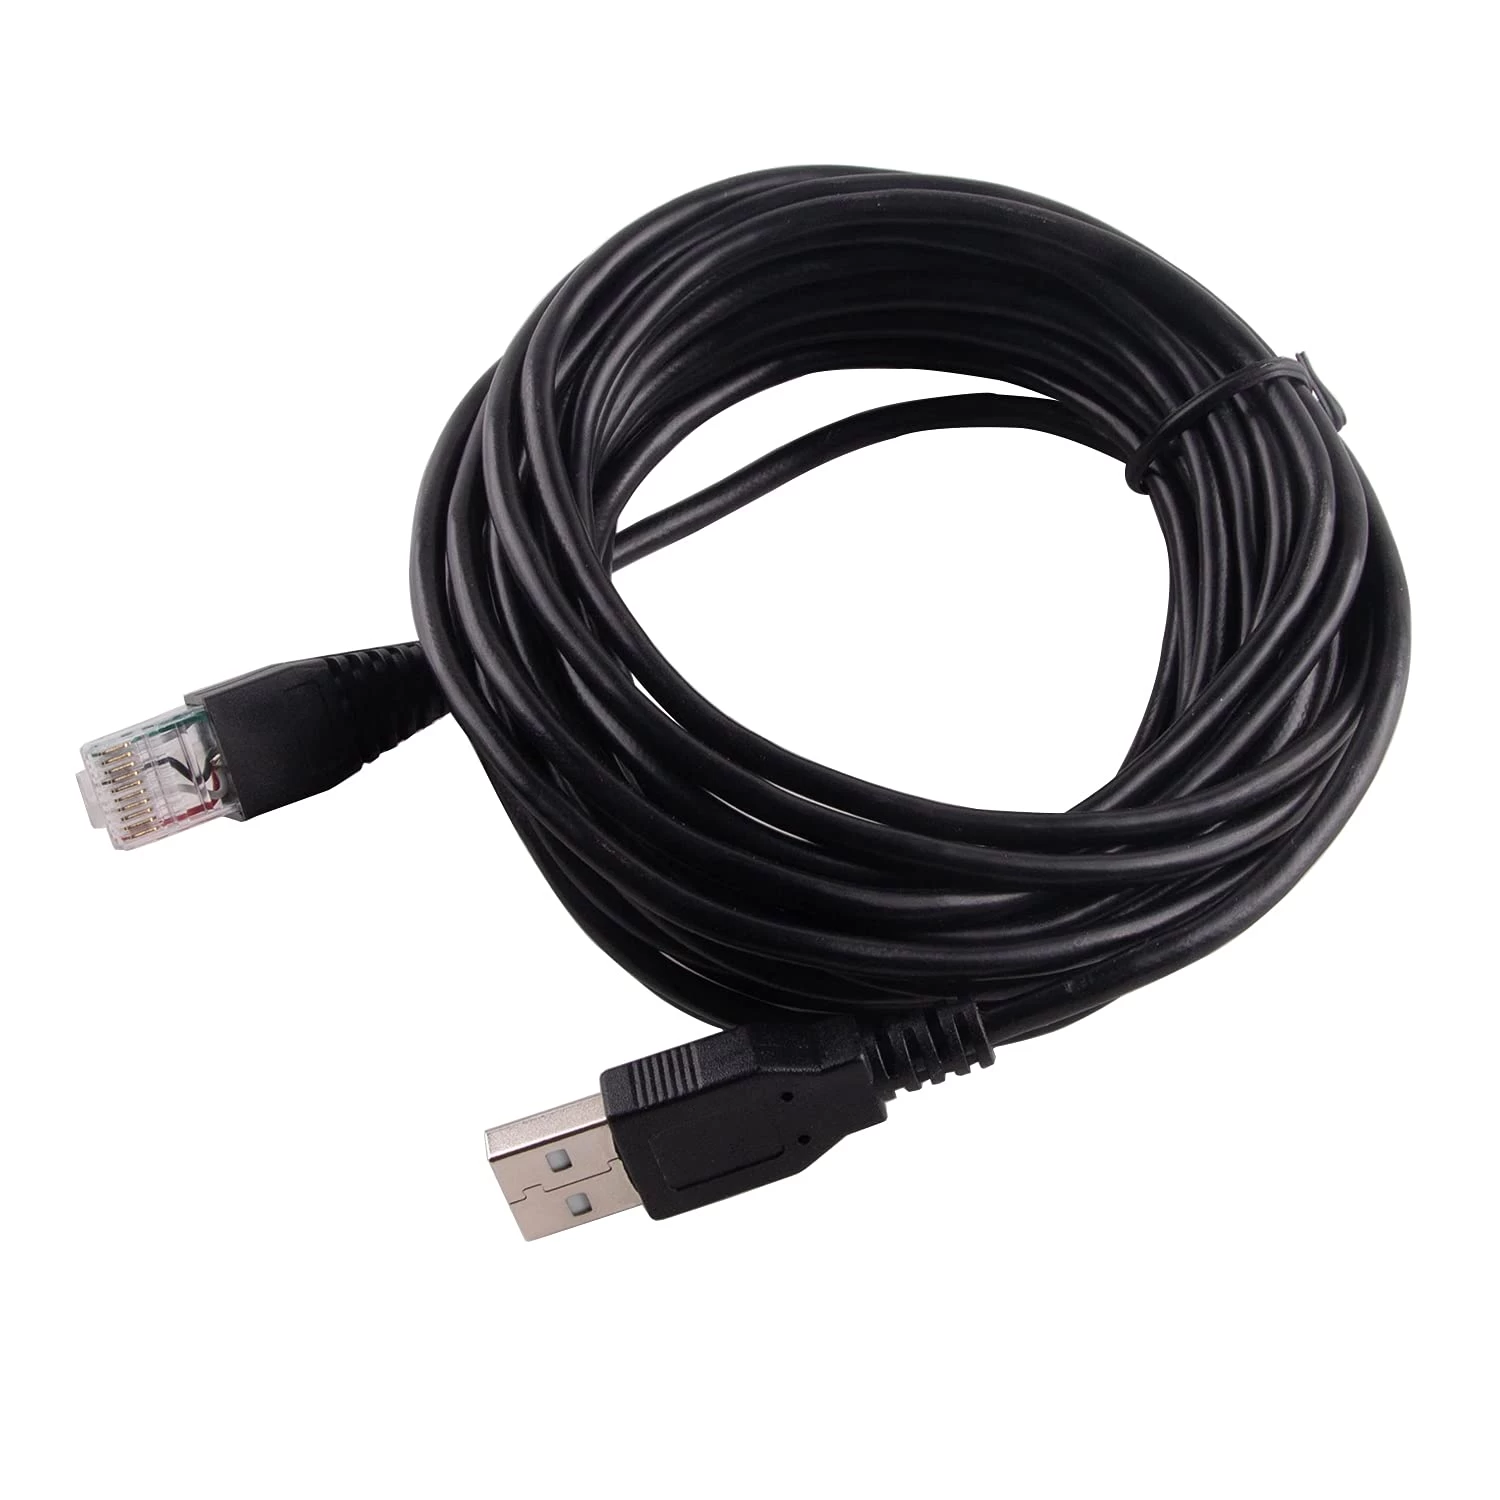 APC-kabel USB naar RJ50-besturingskabel voor slimme UPS